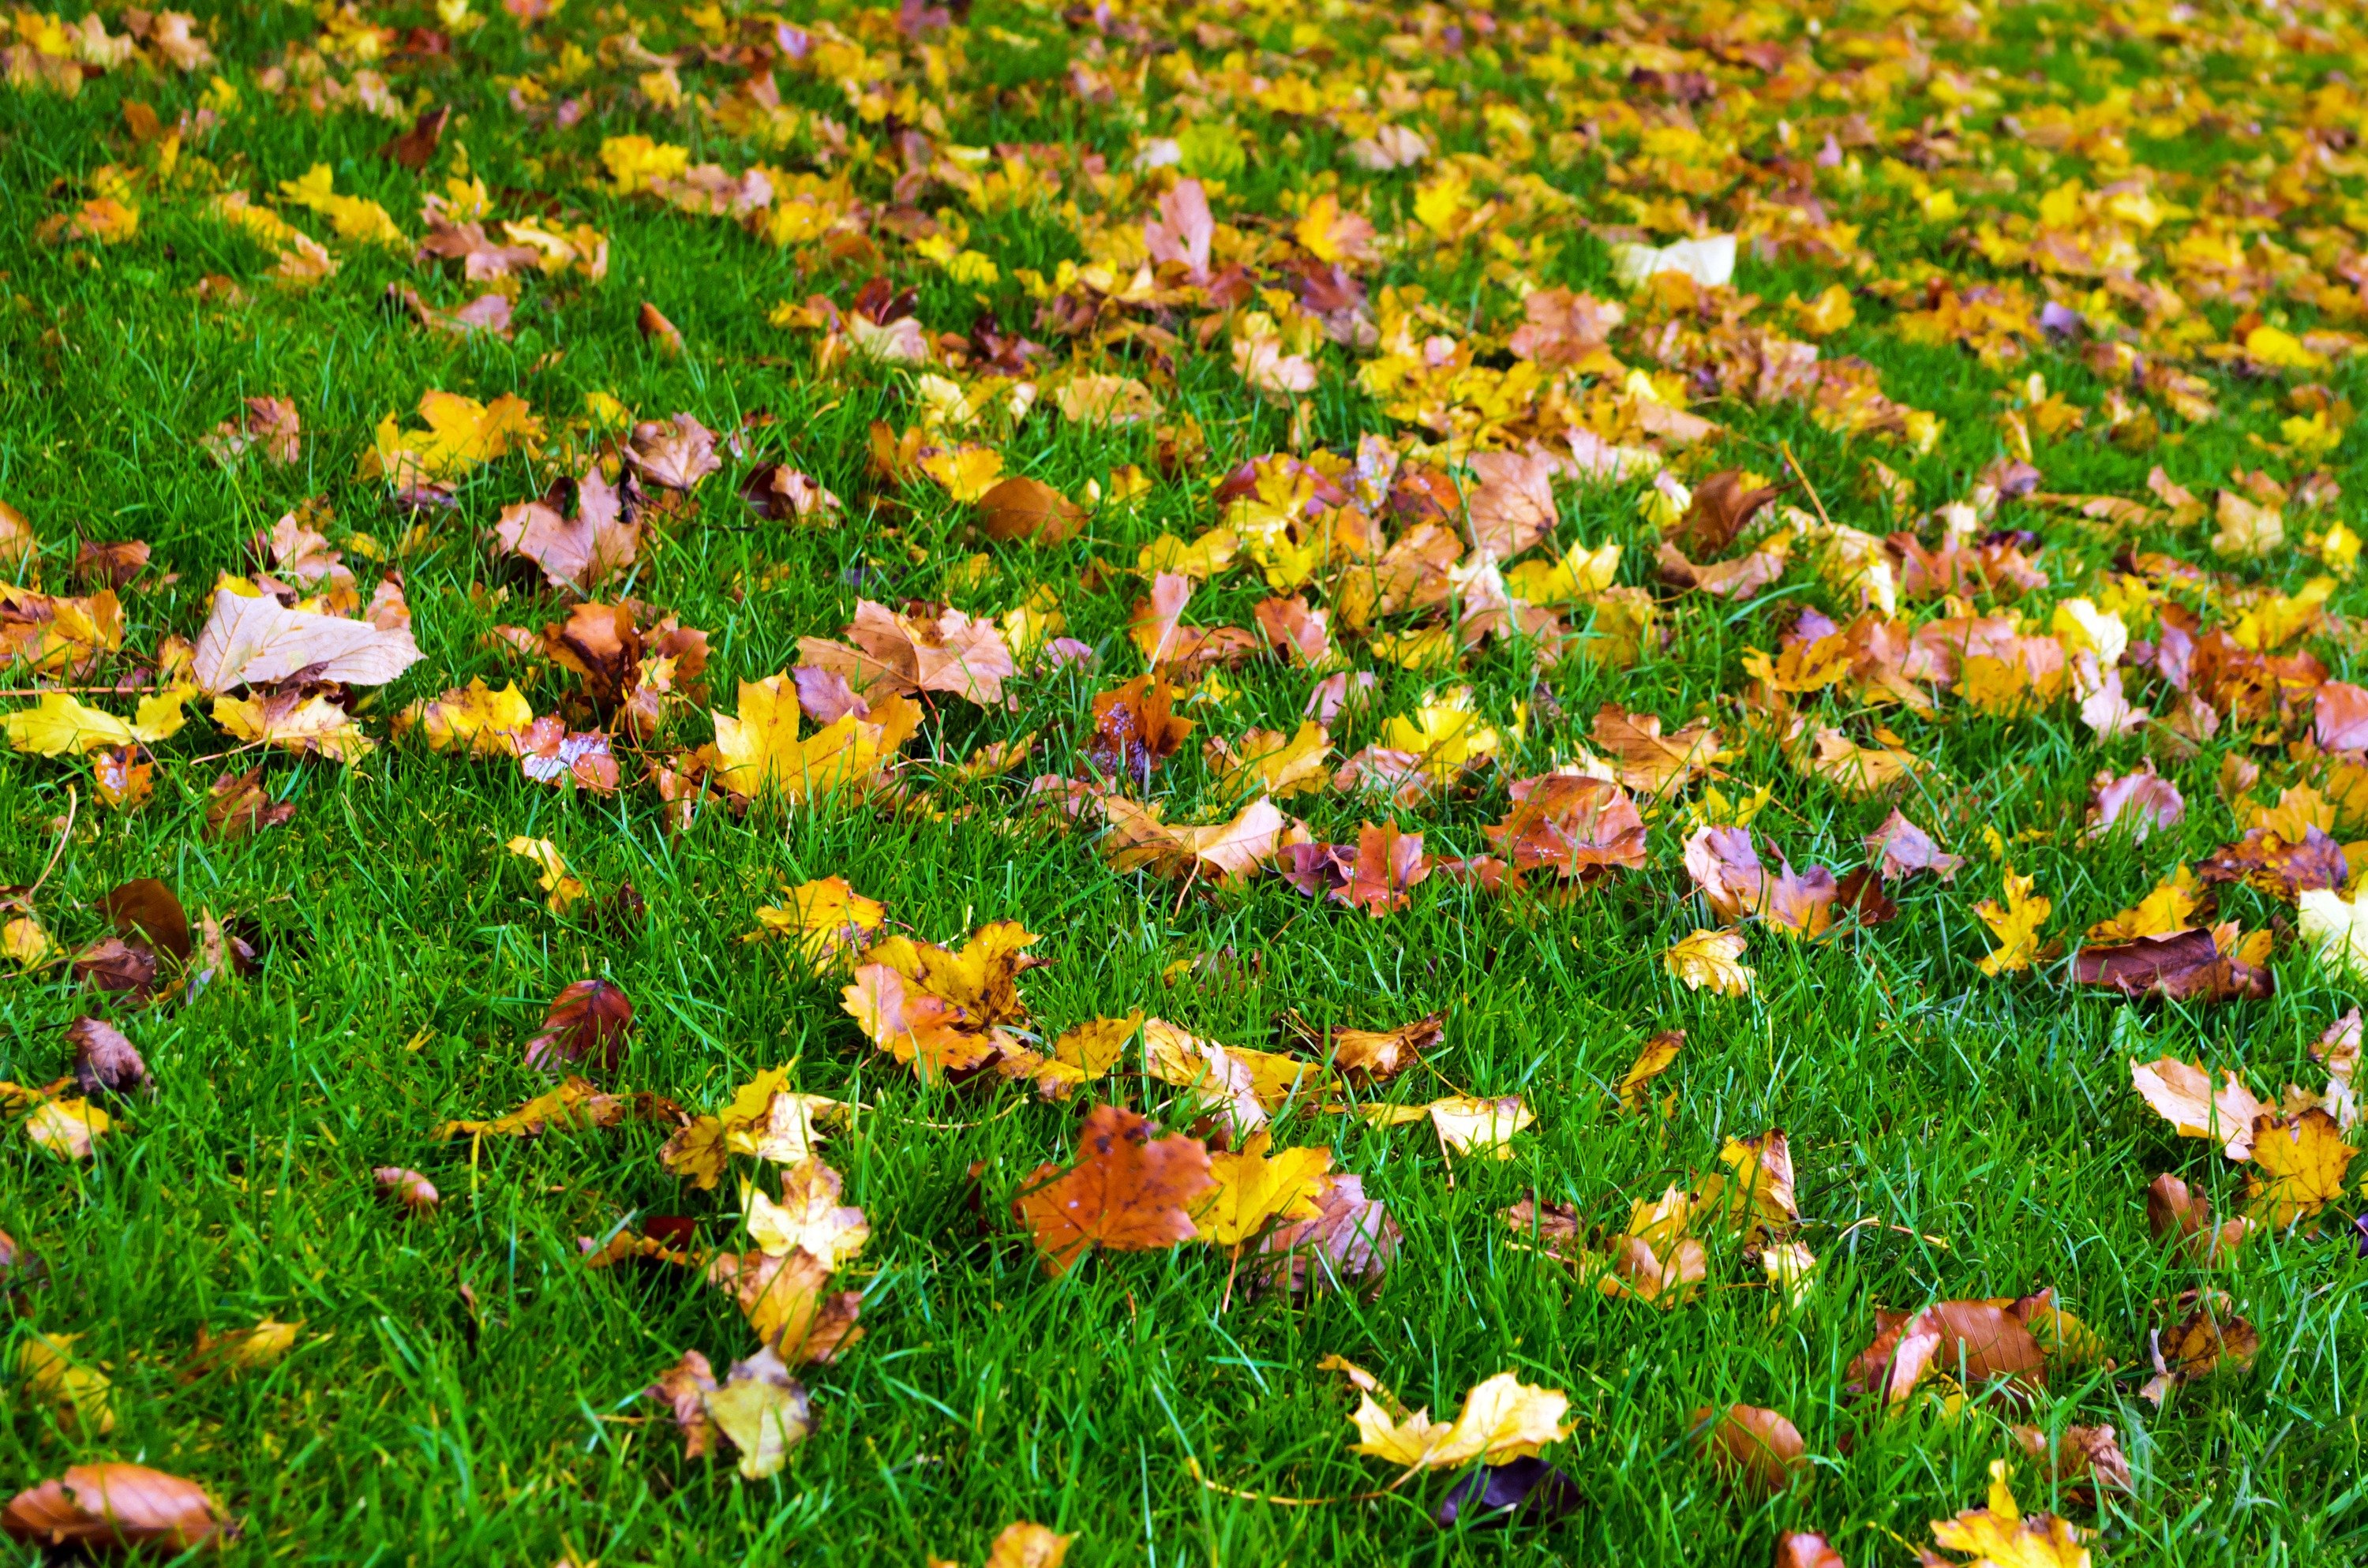 Осенняя Поляна. Осенняя трава. Поляна с осенними листьями. Осенний газон. Хлопков осень